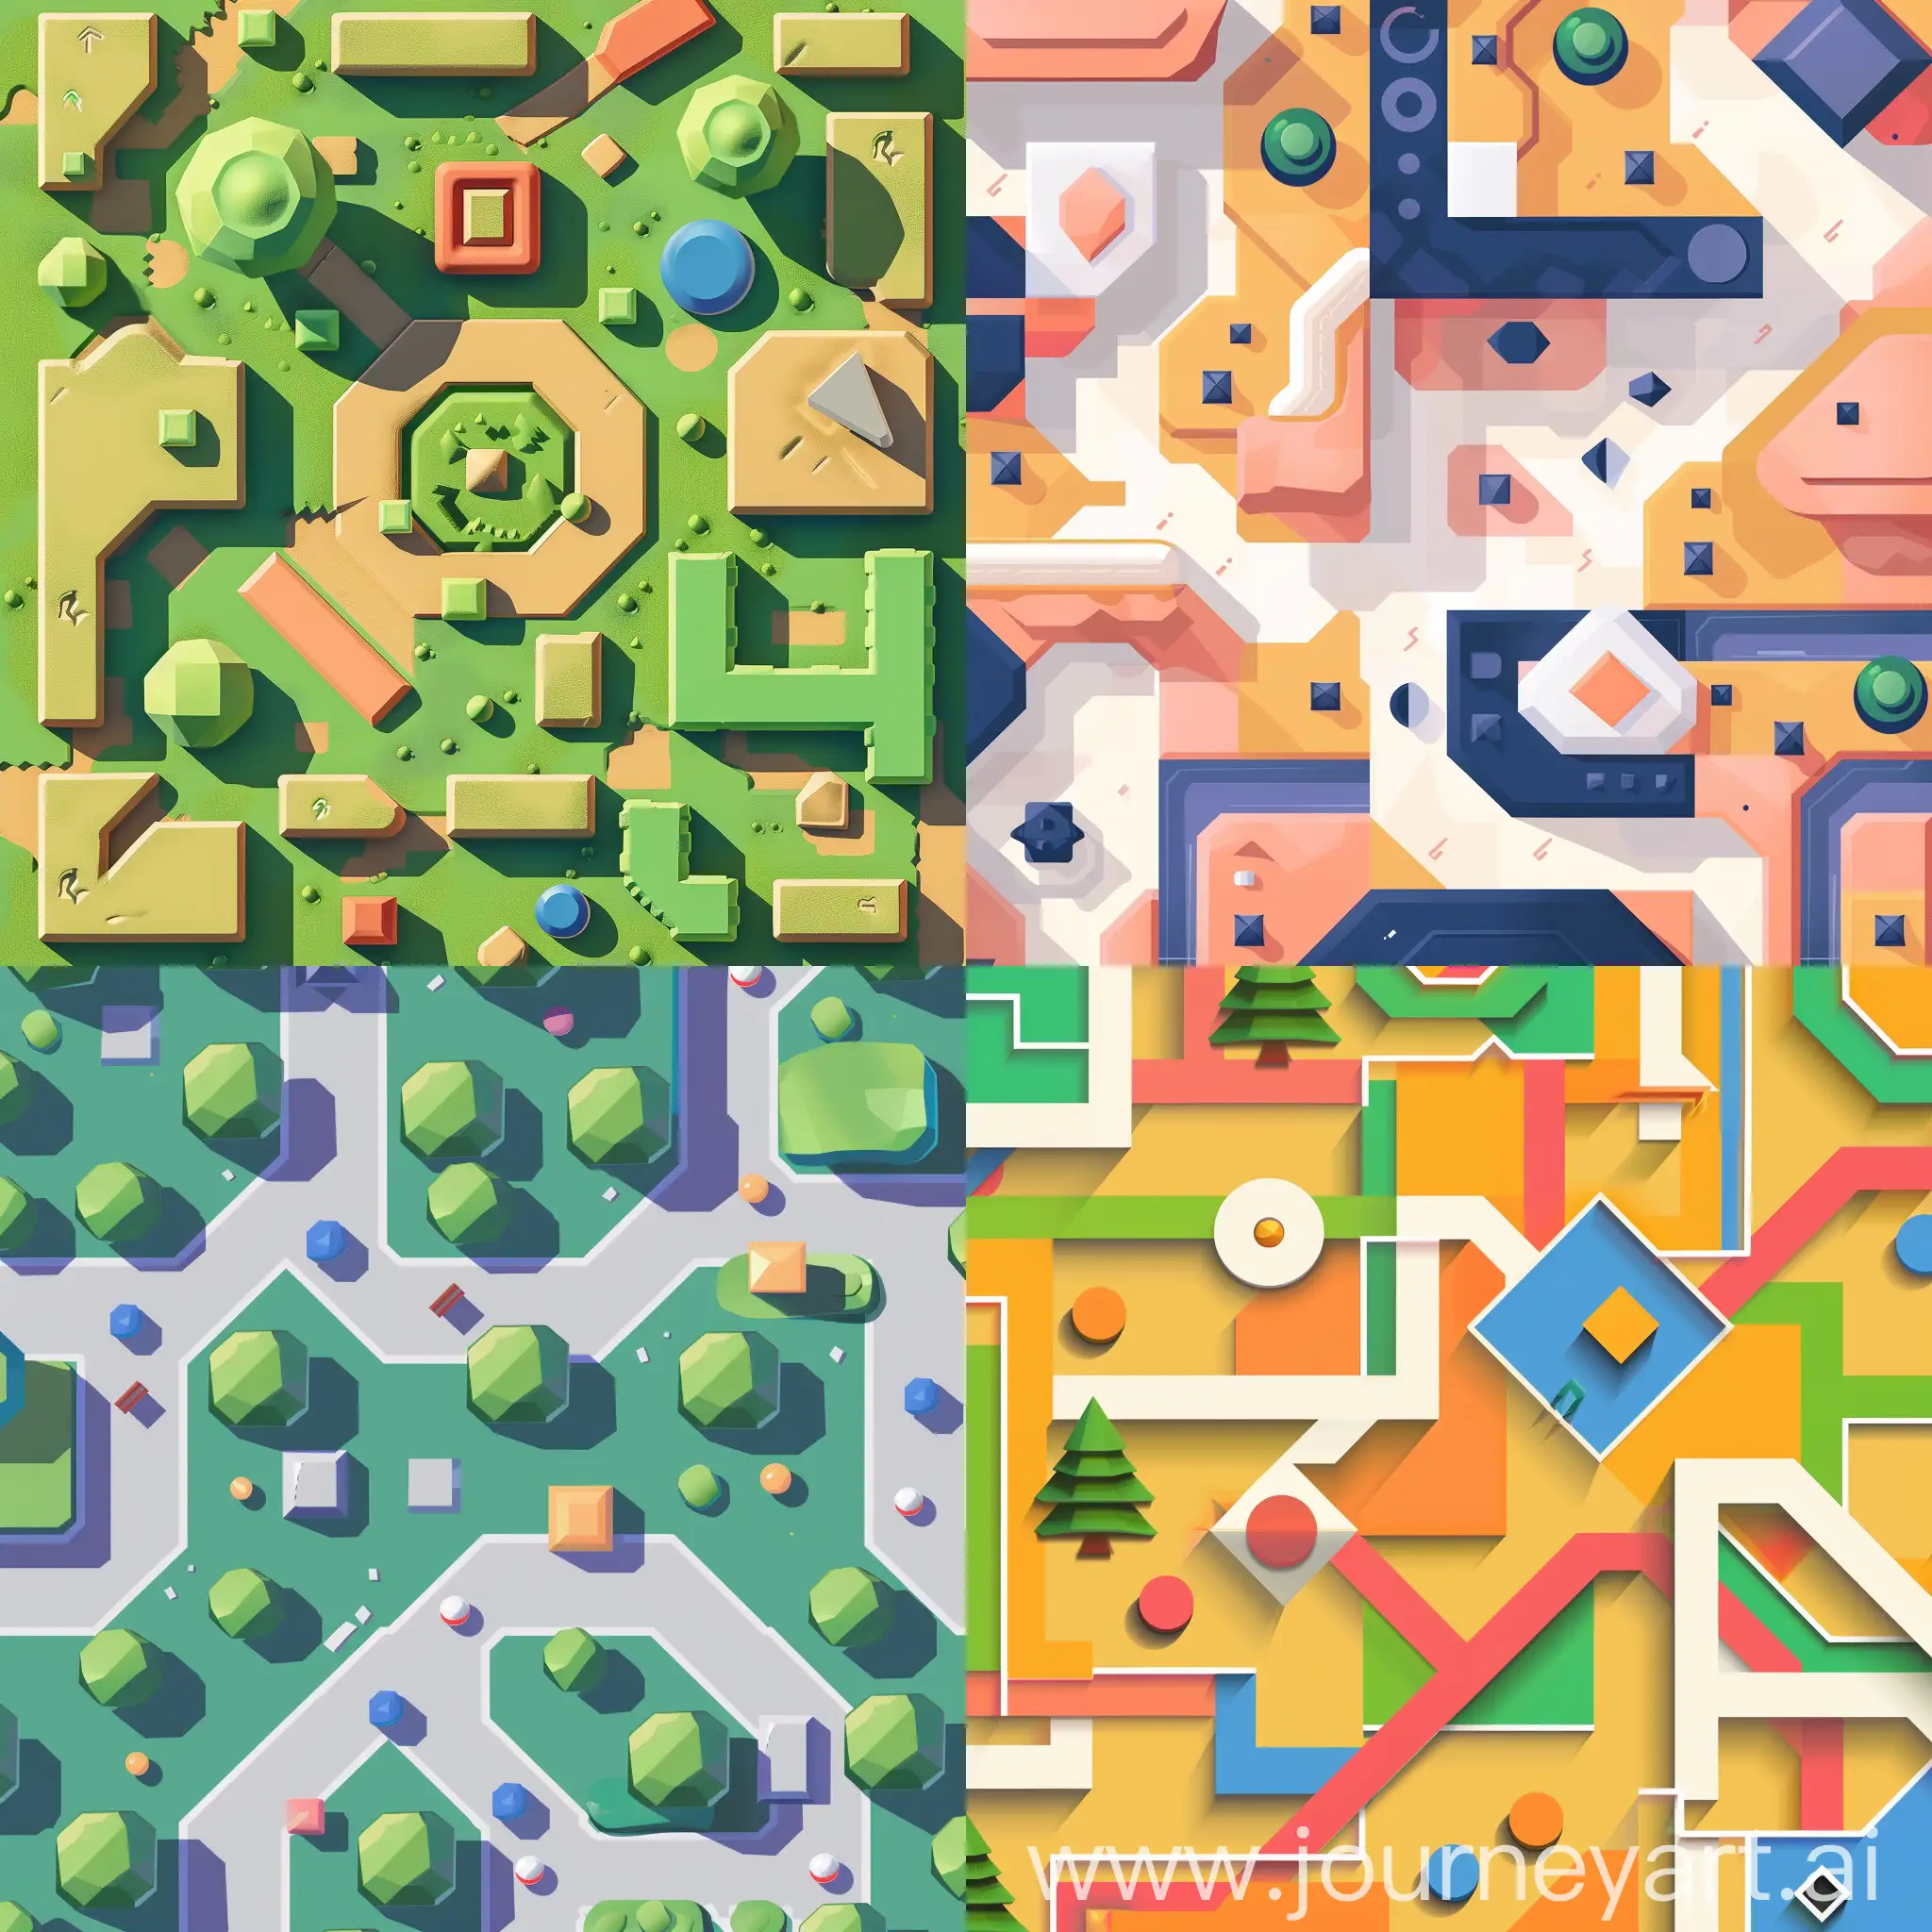 Minimalist-Geometric-TopDown-Game-Background